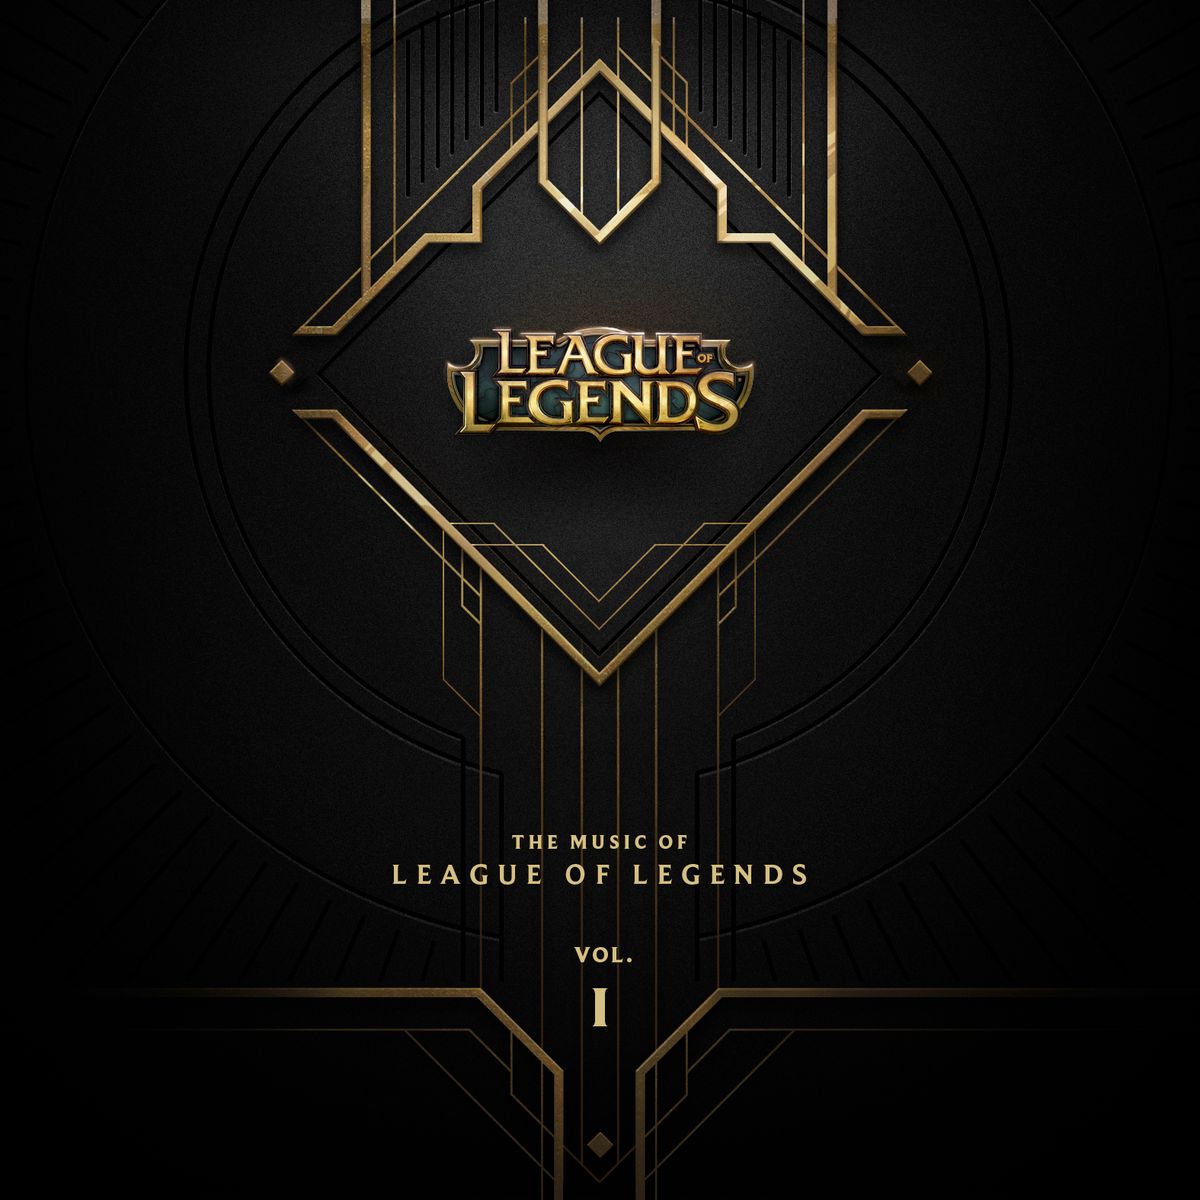 League Of Legends The Music of League of Legends Vol. 1 cover artwork